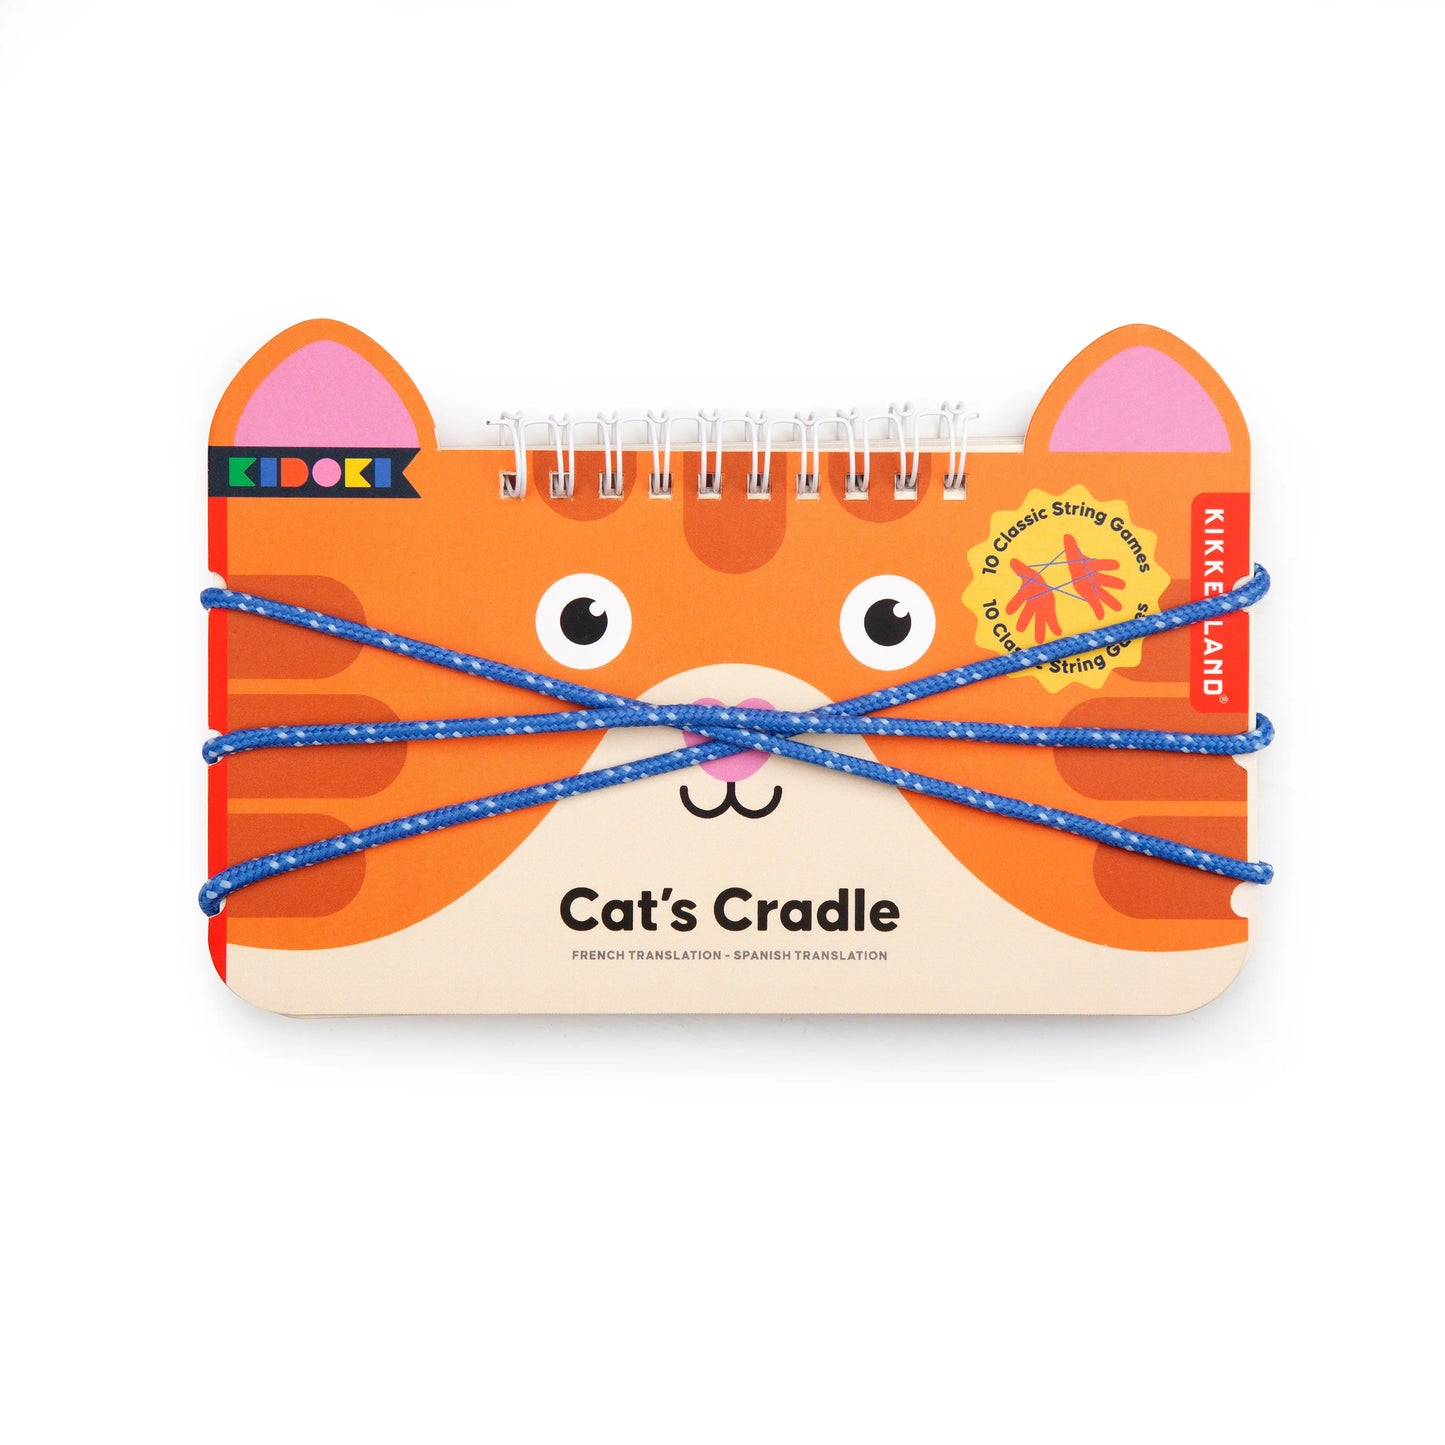 Kidoki Cat's Cradle